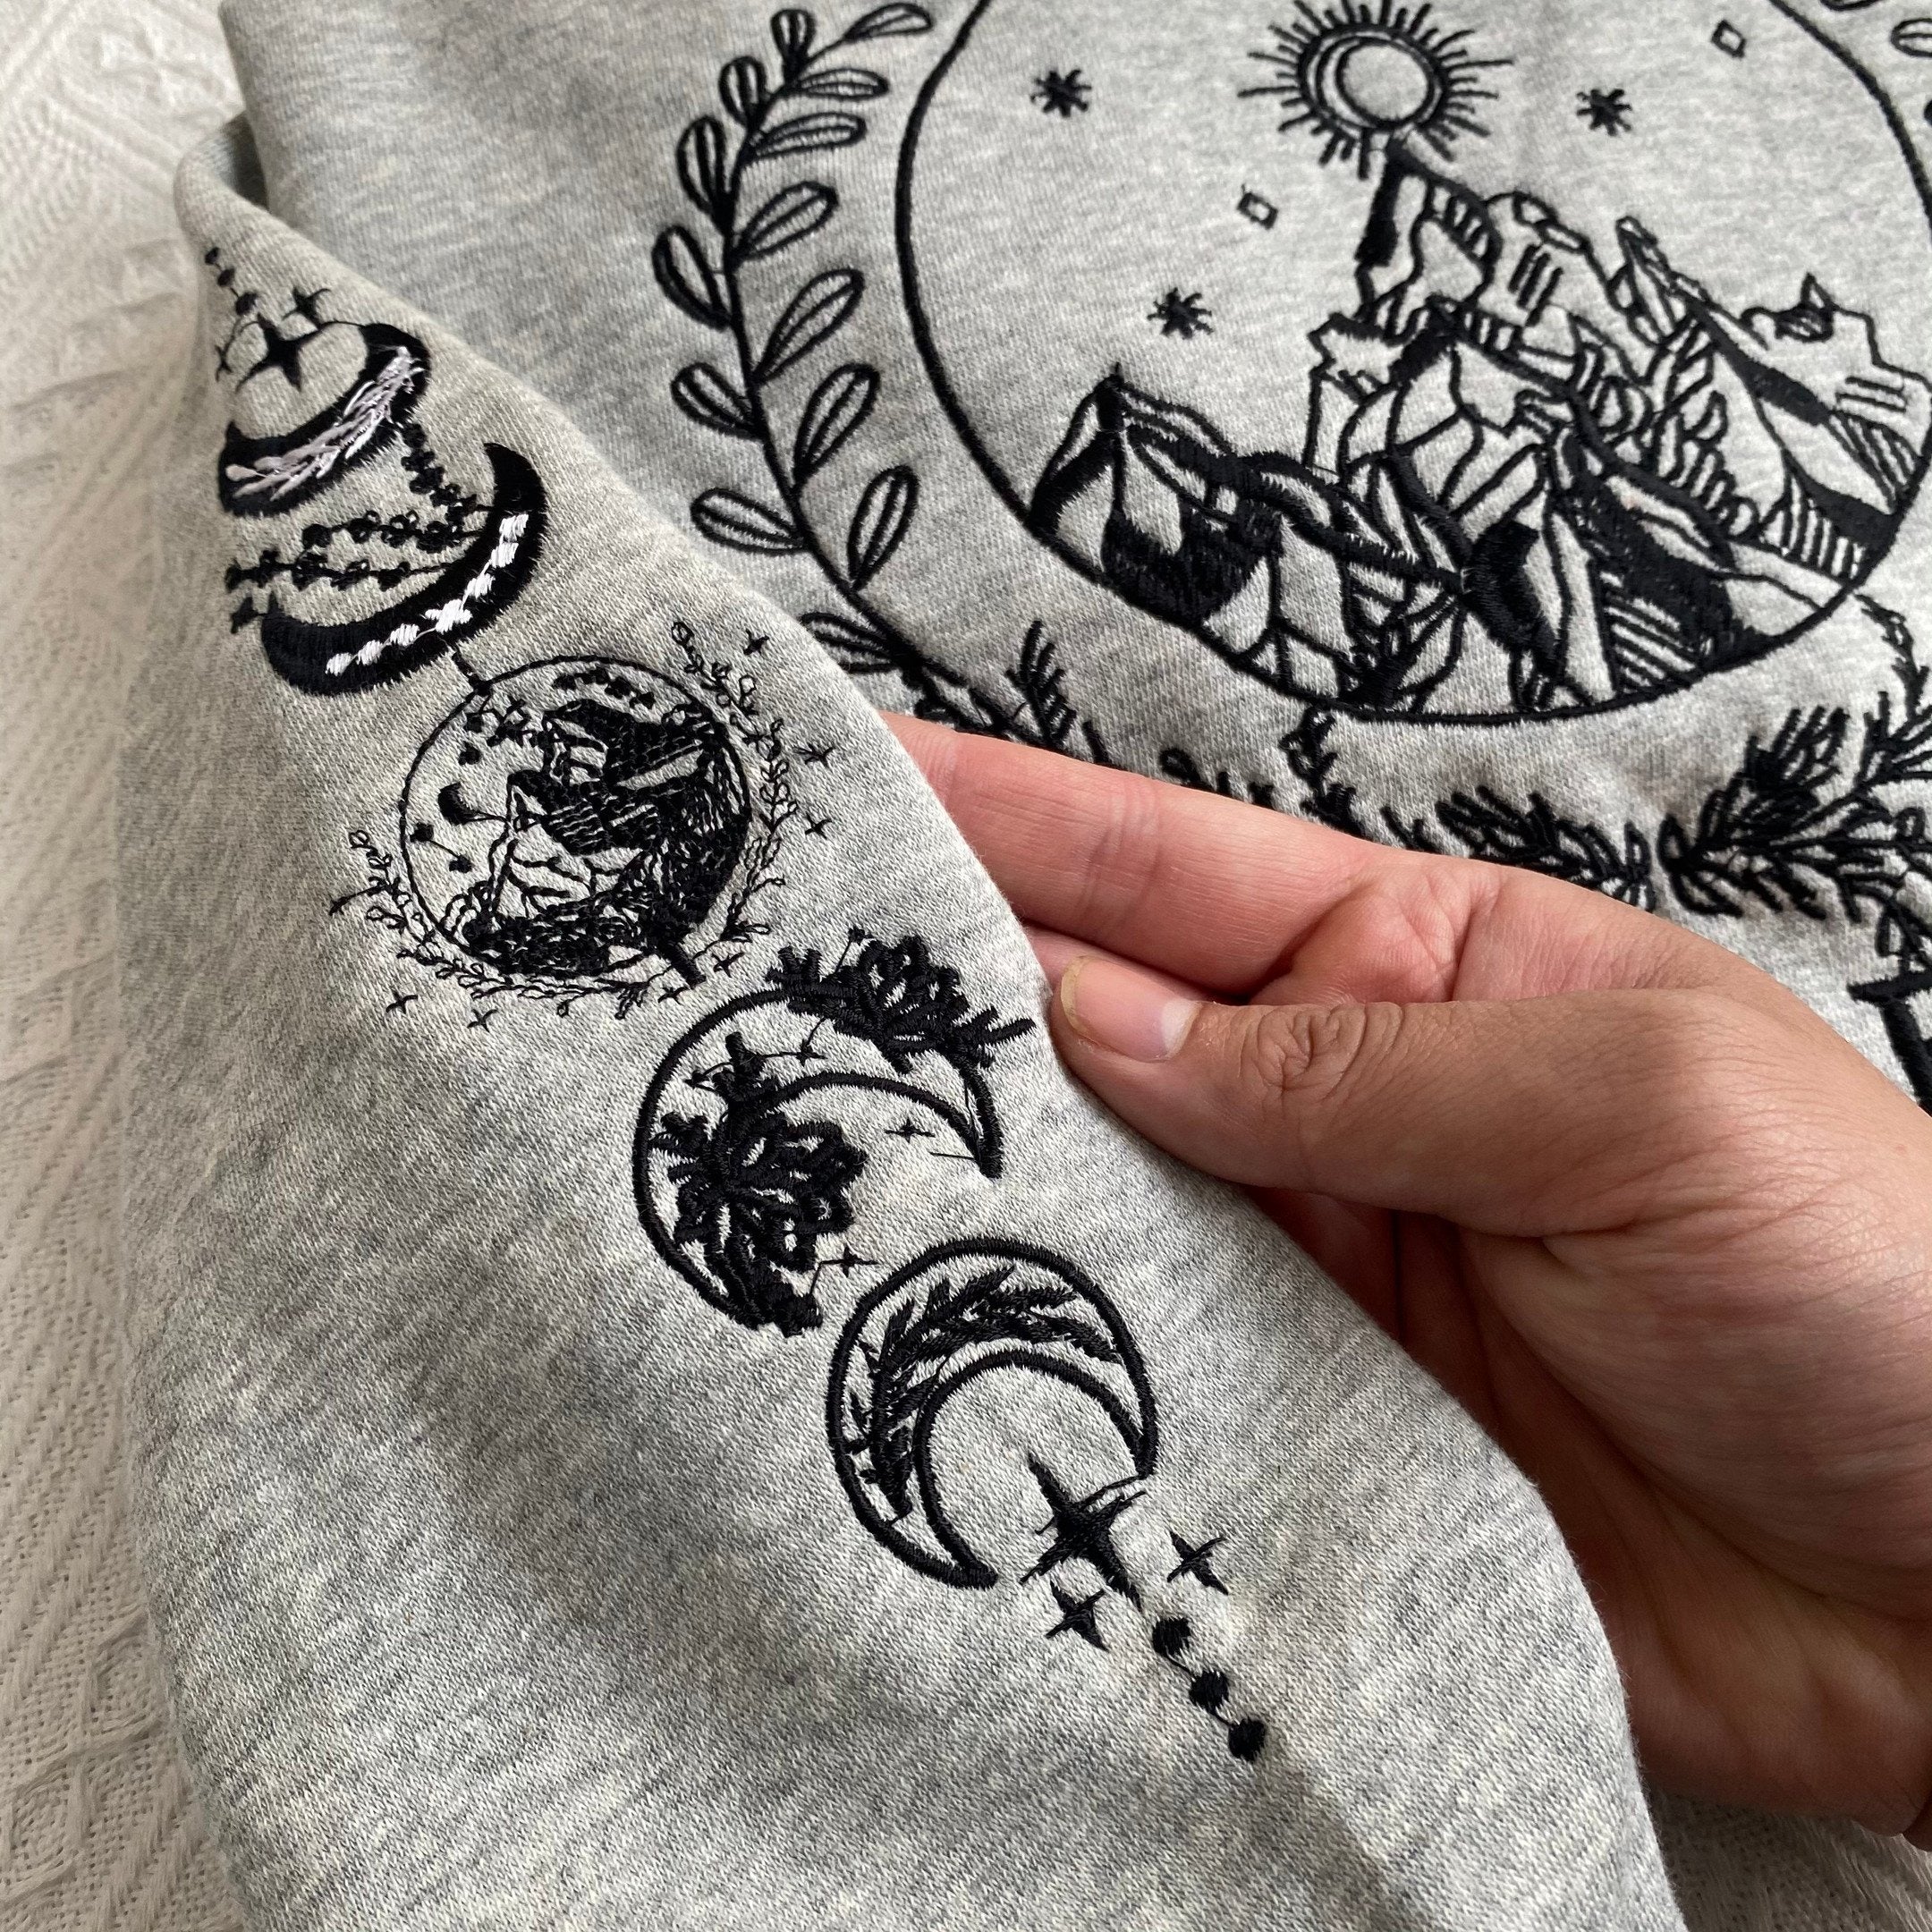 Velaris City Of Starlight Embroidered Sweatshirt, Acotar Embroidered Hoodie, Bookish Gift